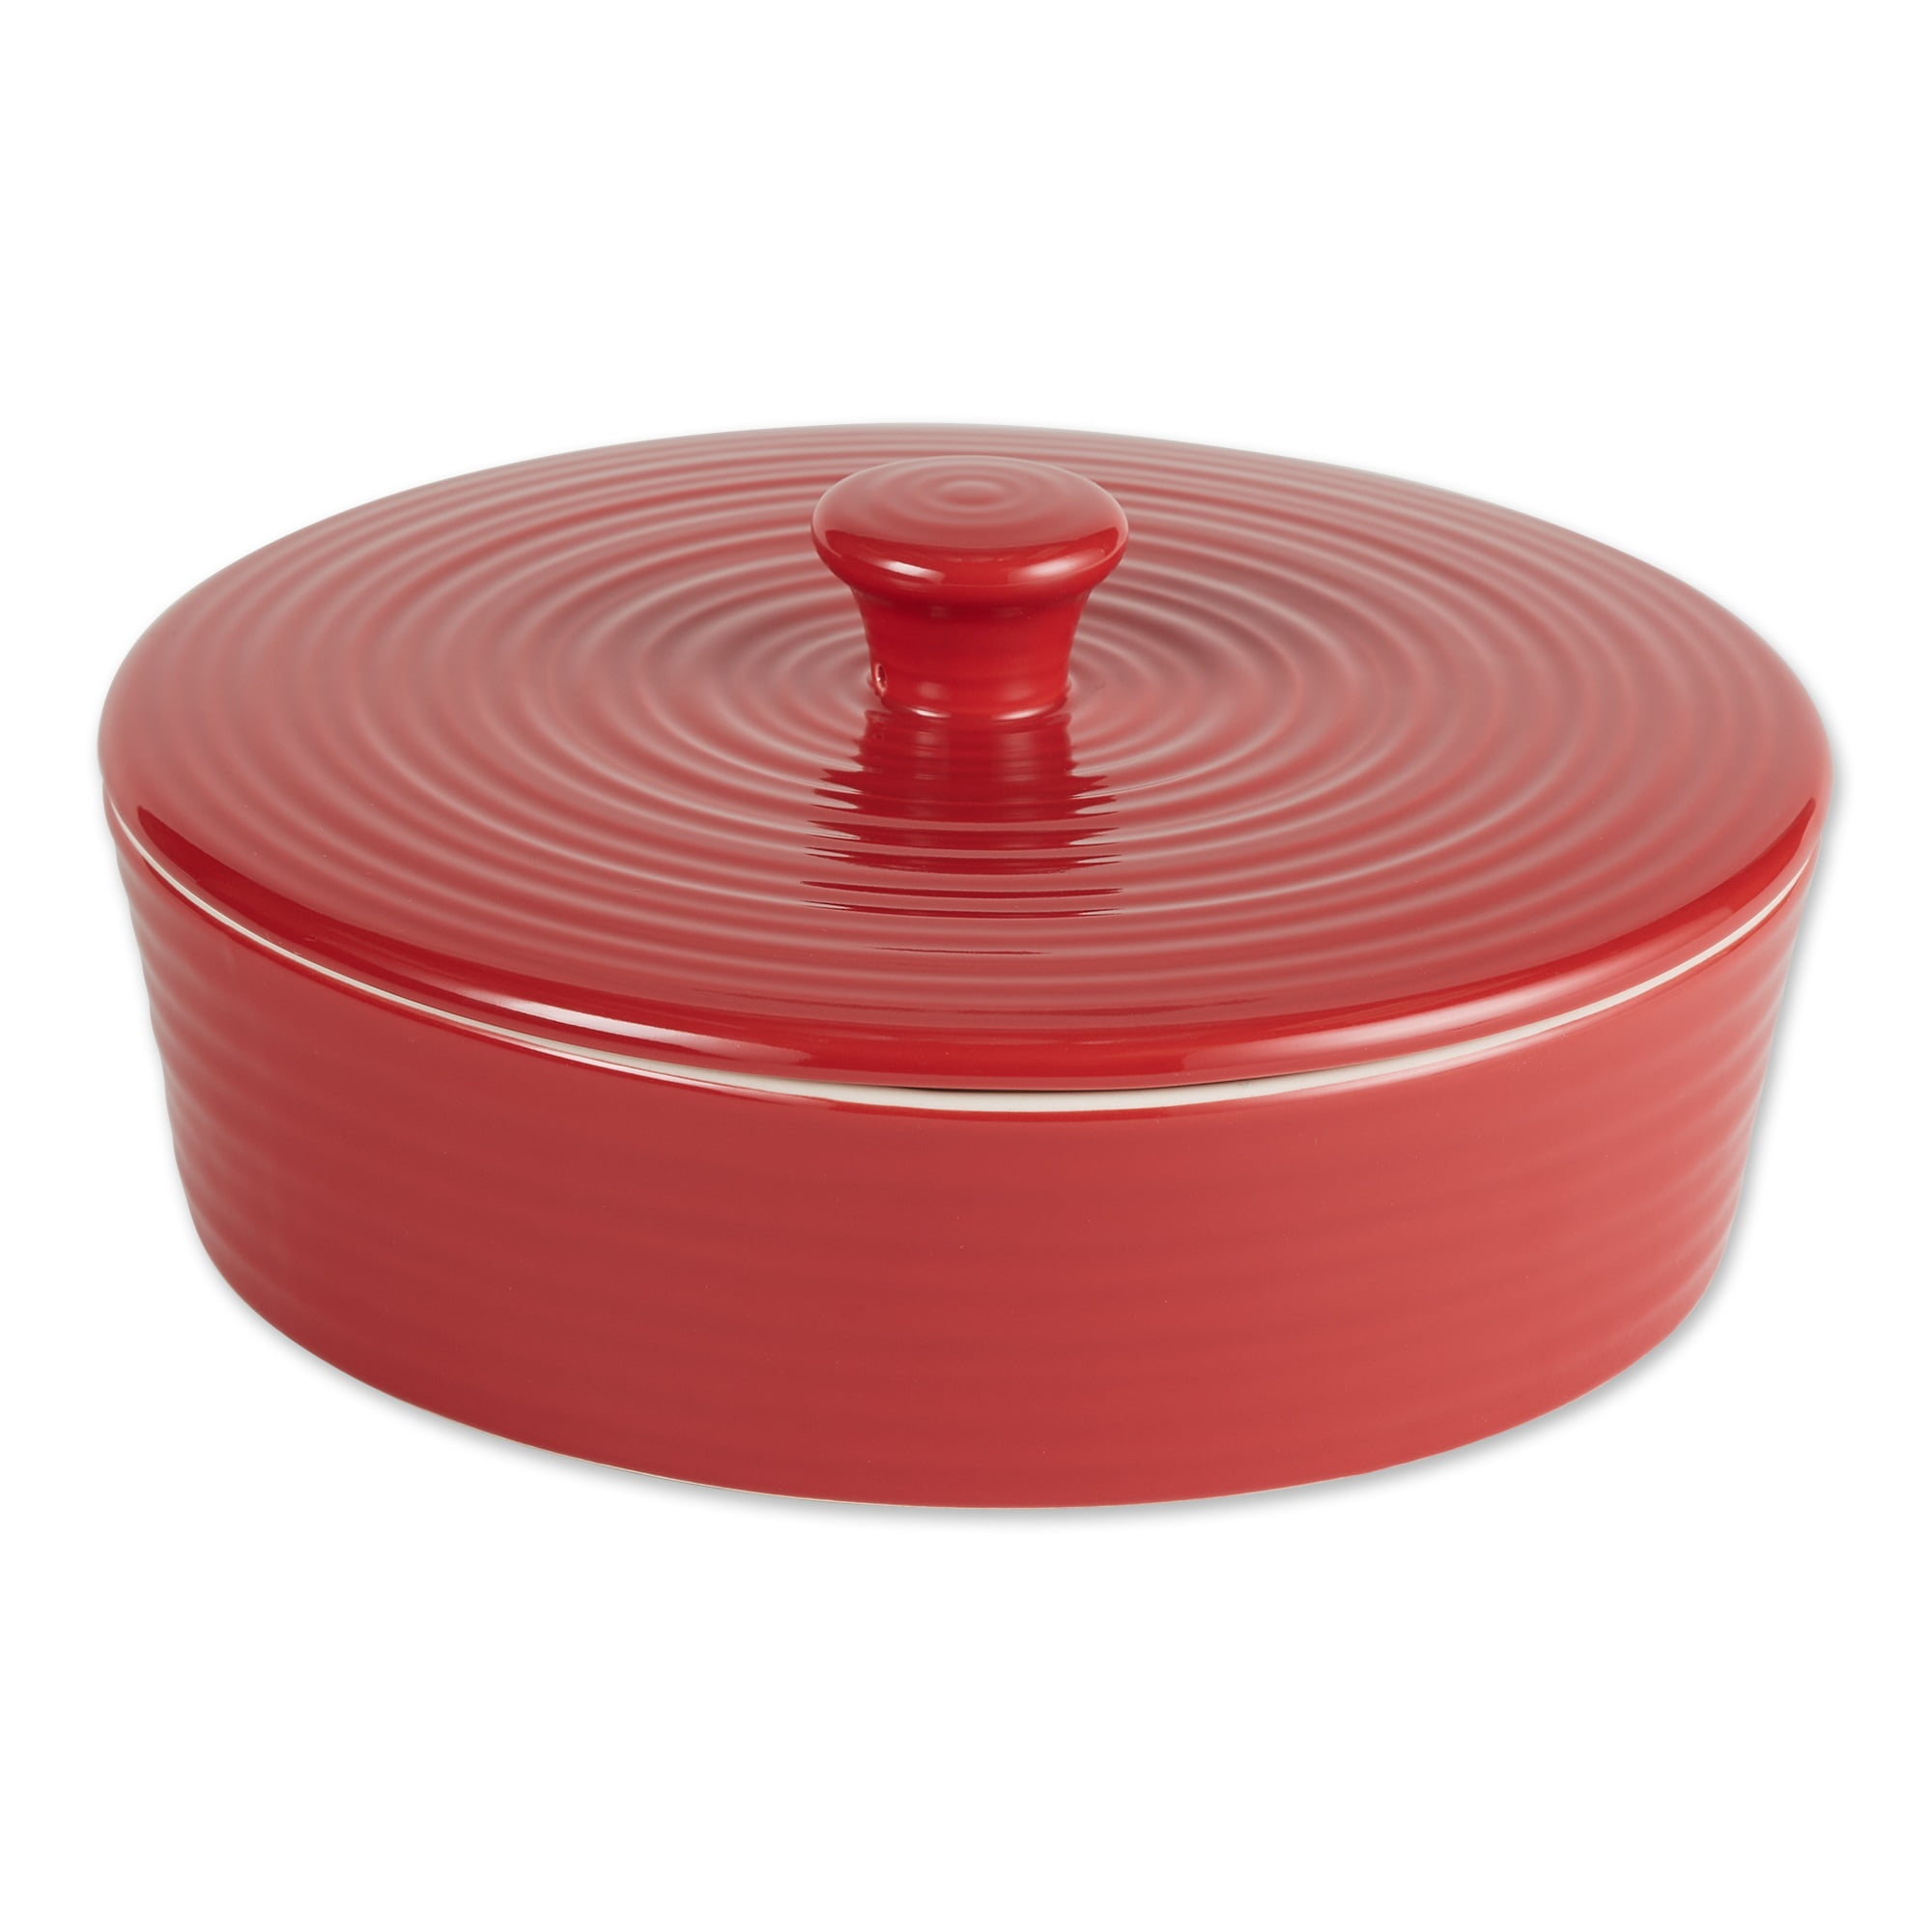 Glazed Stoneware Red New In Box Details about   Parini Tortilla Warmer 8" dia. Heavy Duty 